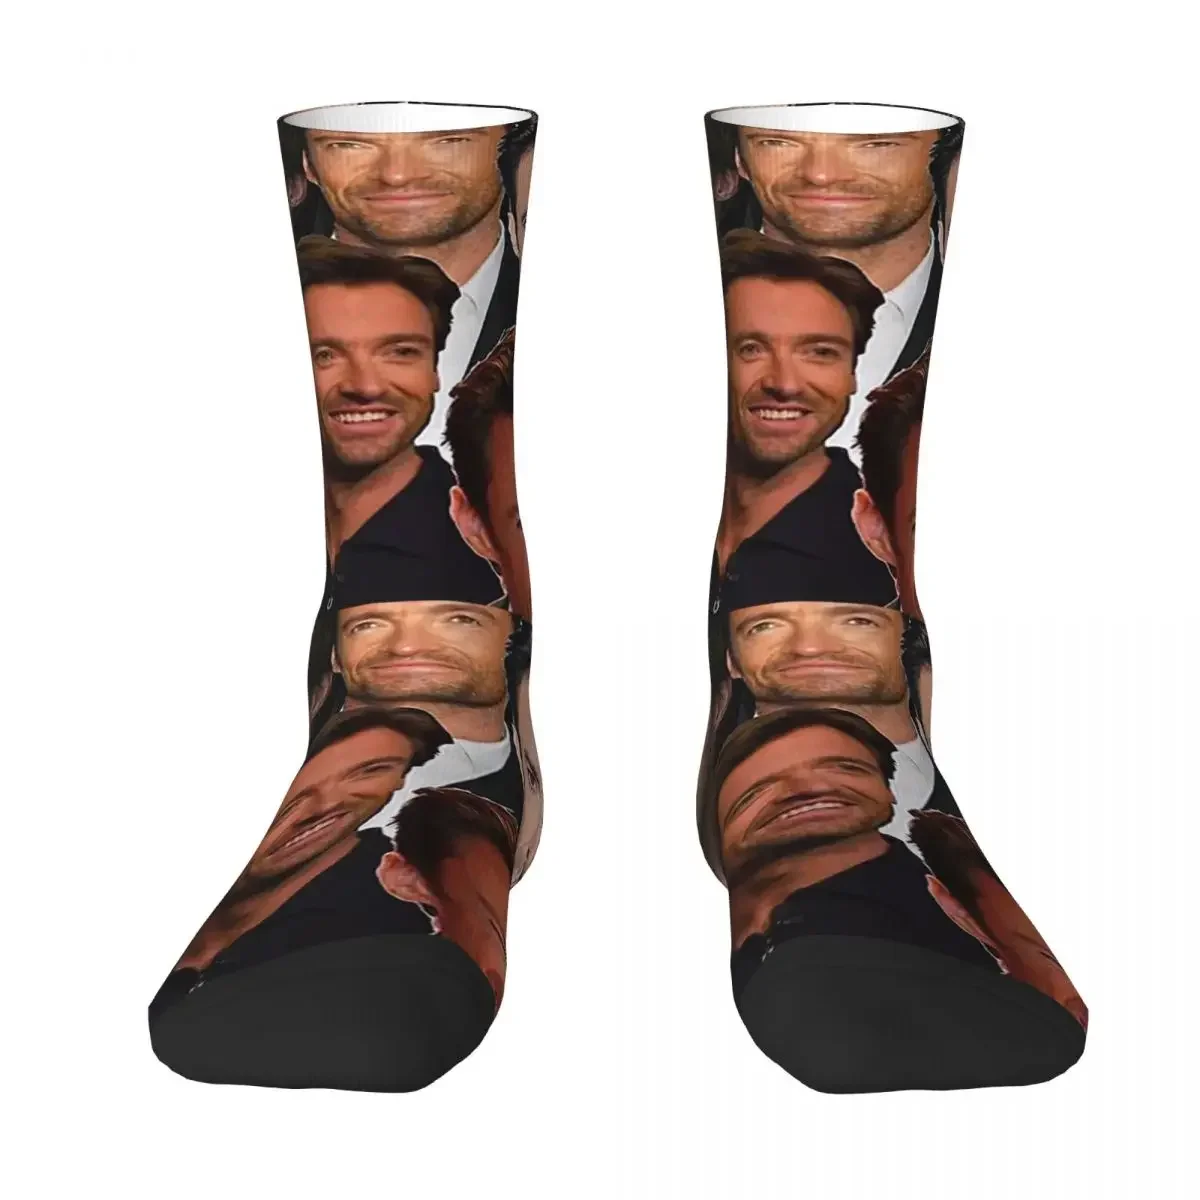 

All Seasons Crew Stockings Hugh Jackman Photo Collage Socks Harajuku Funny Long Socks Accessories for Men Women Christmas Gifts